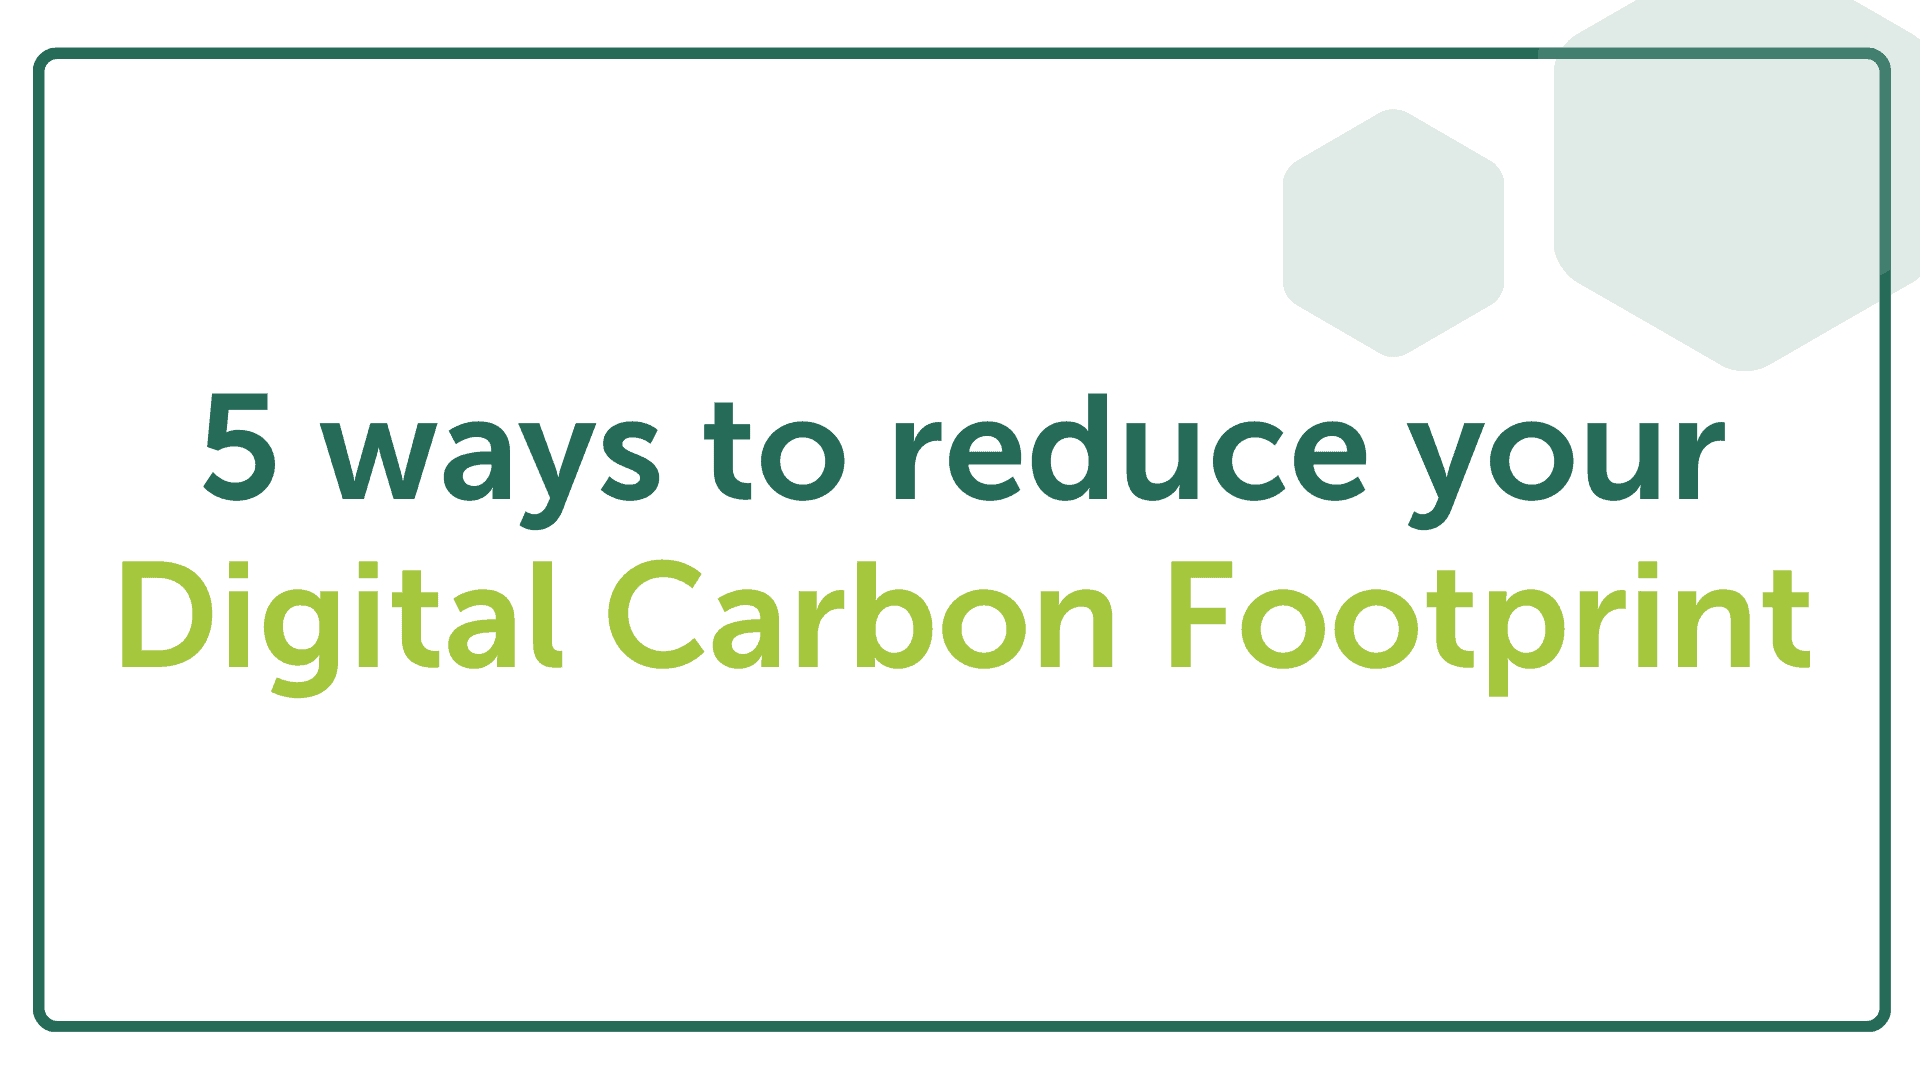 5 Ways to Reduce your Digital Carbon Footprint